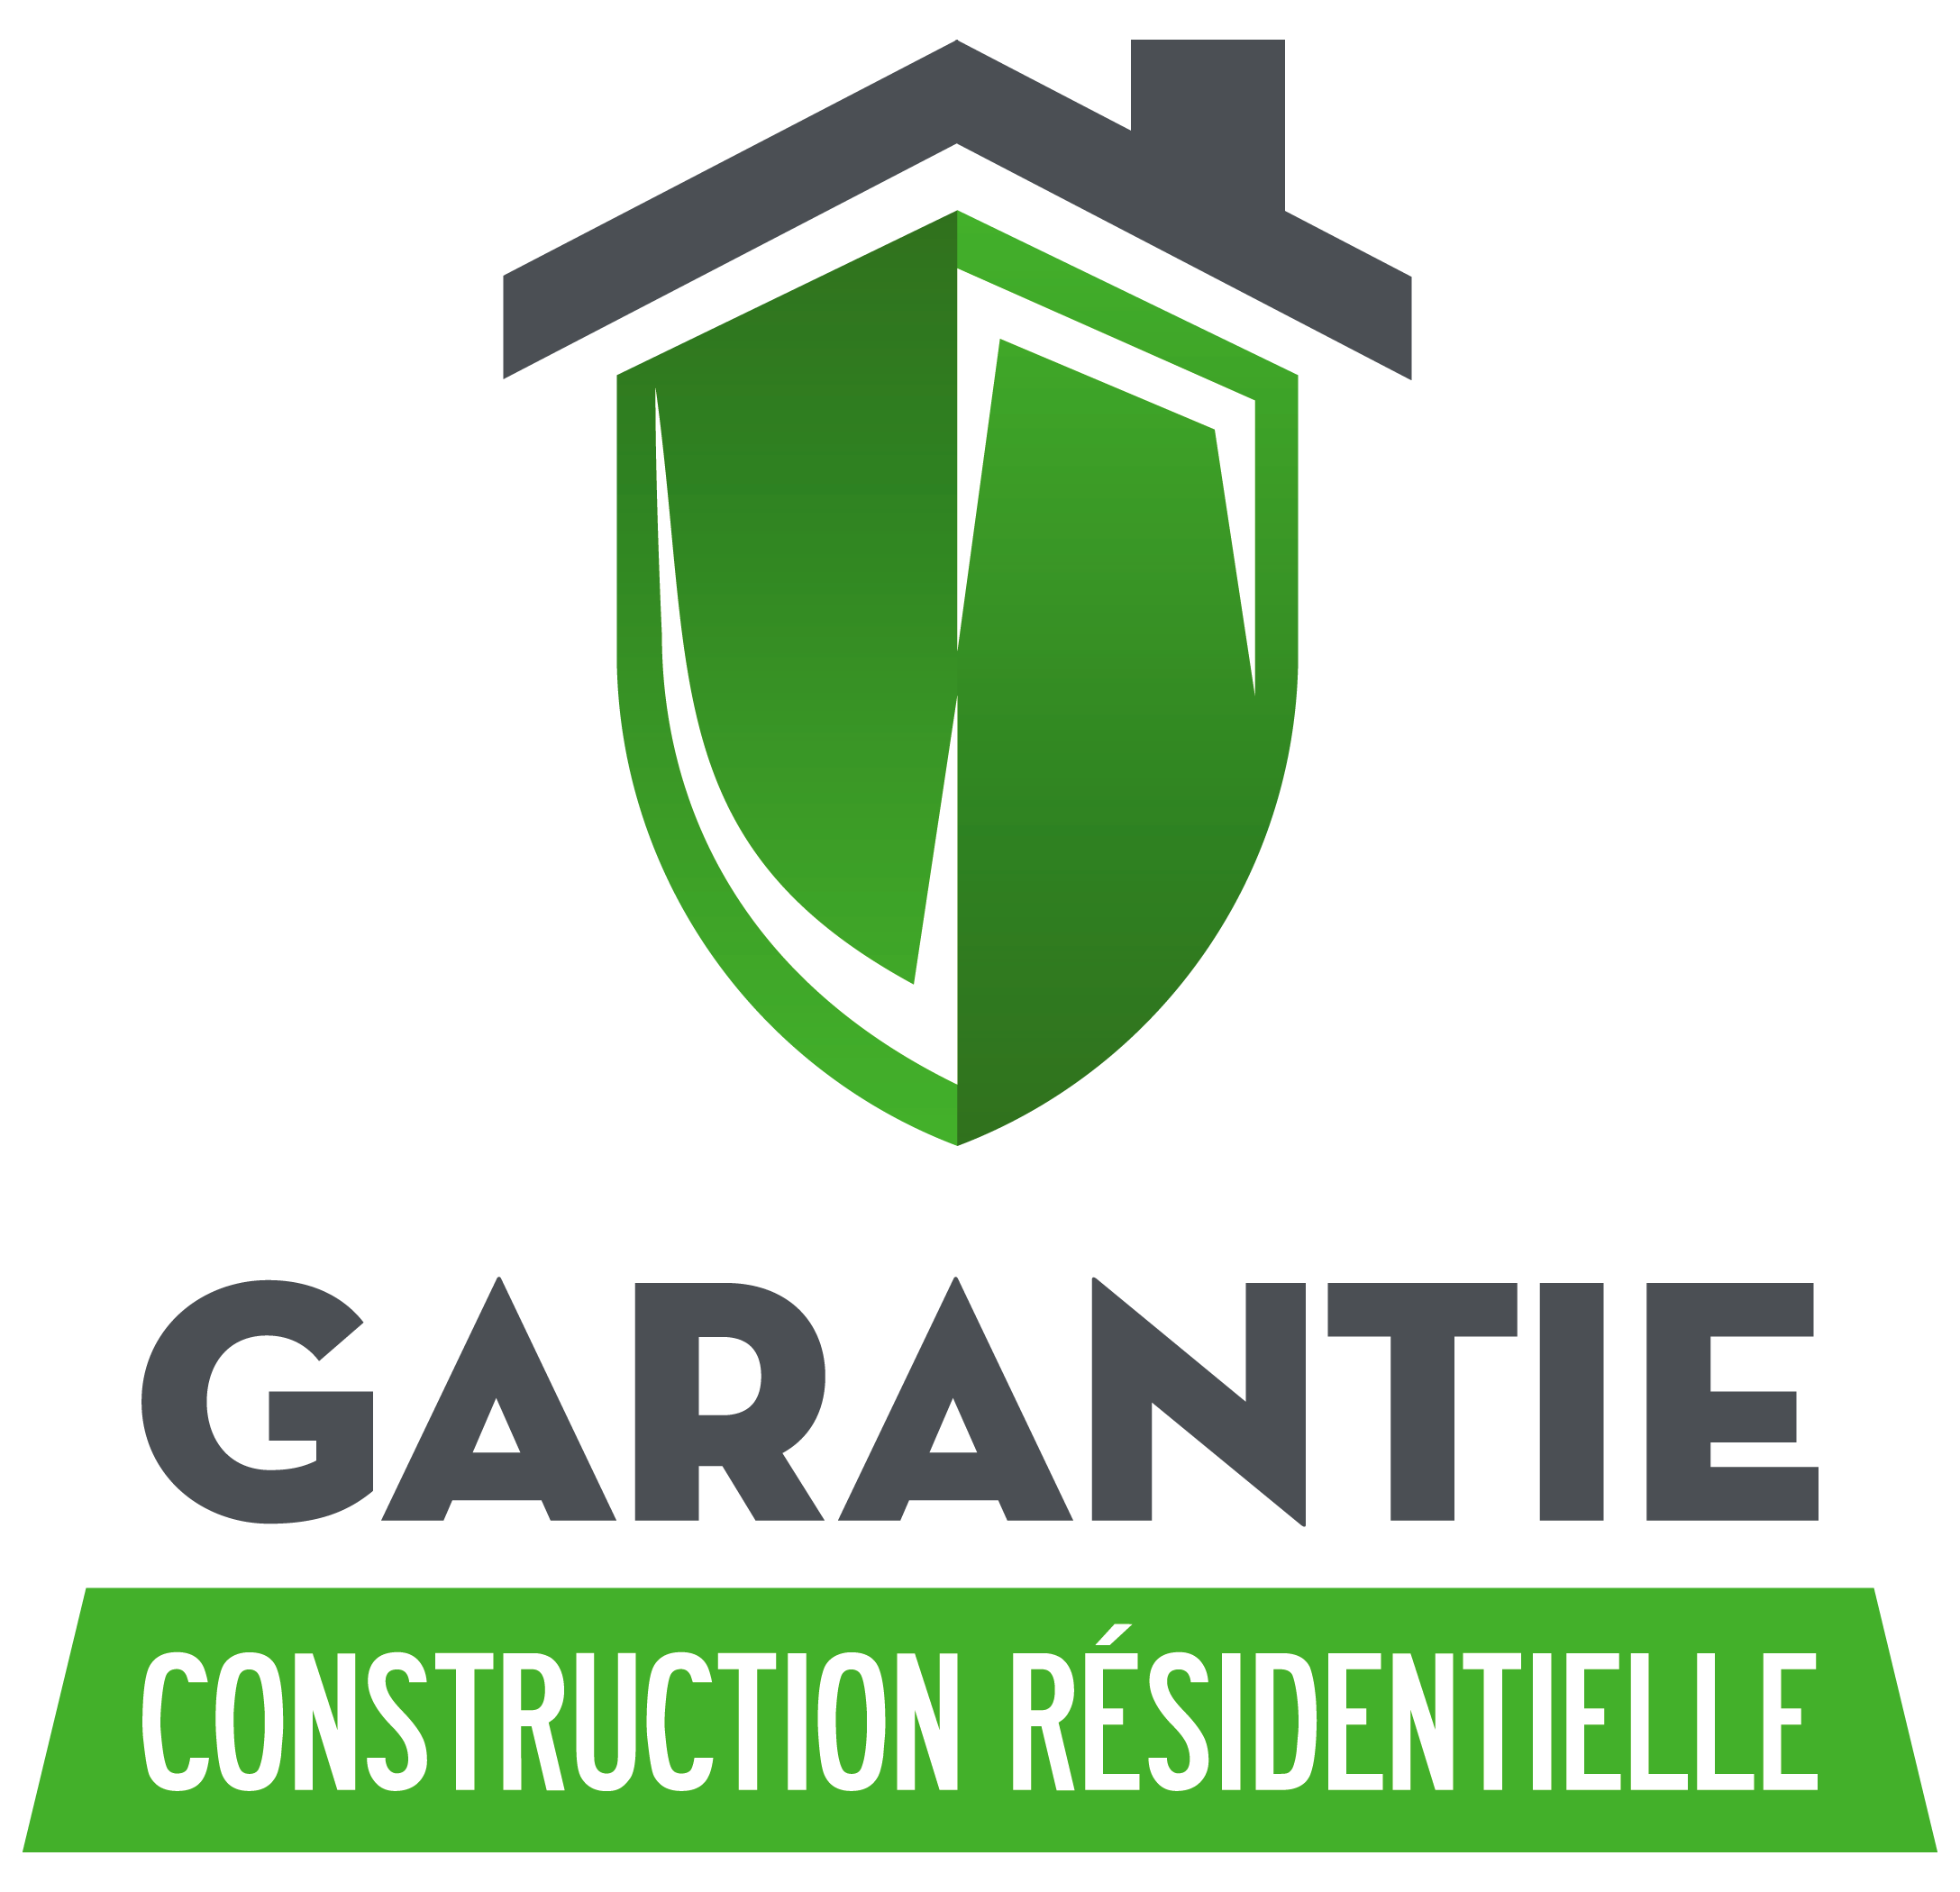 Garantie Construction Résidentielle